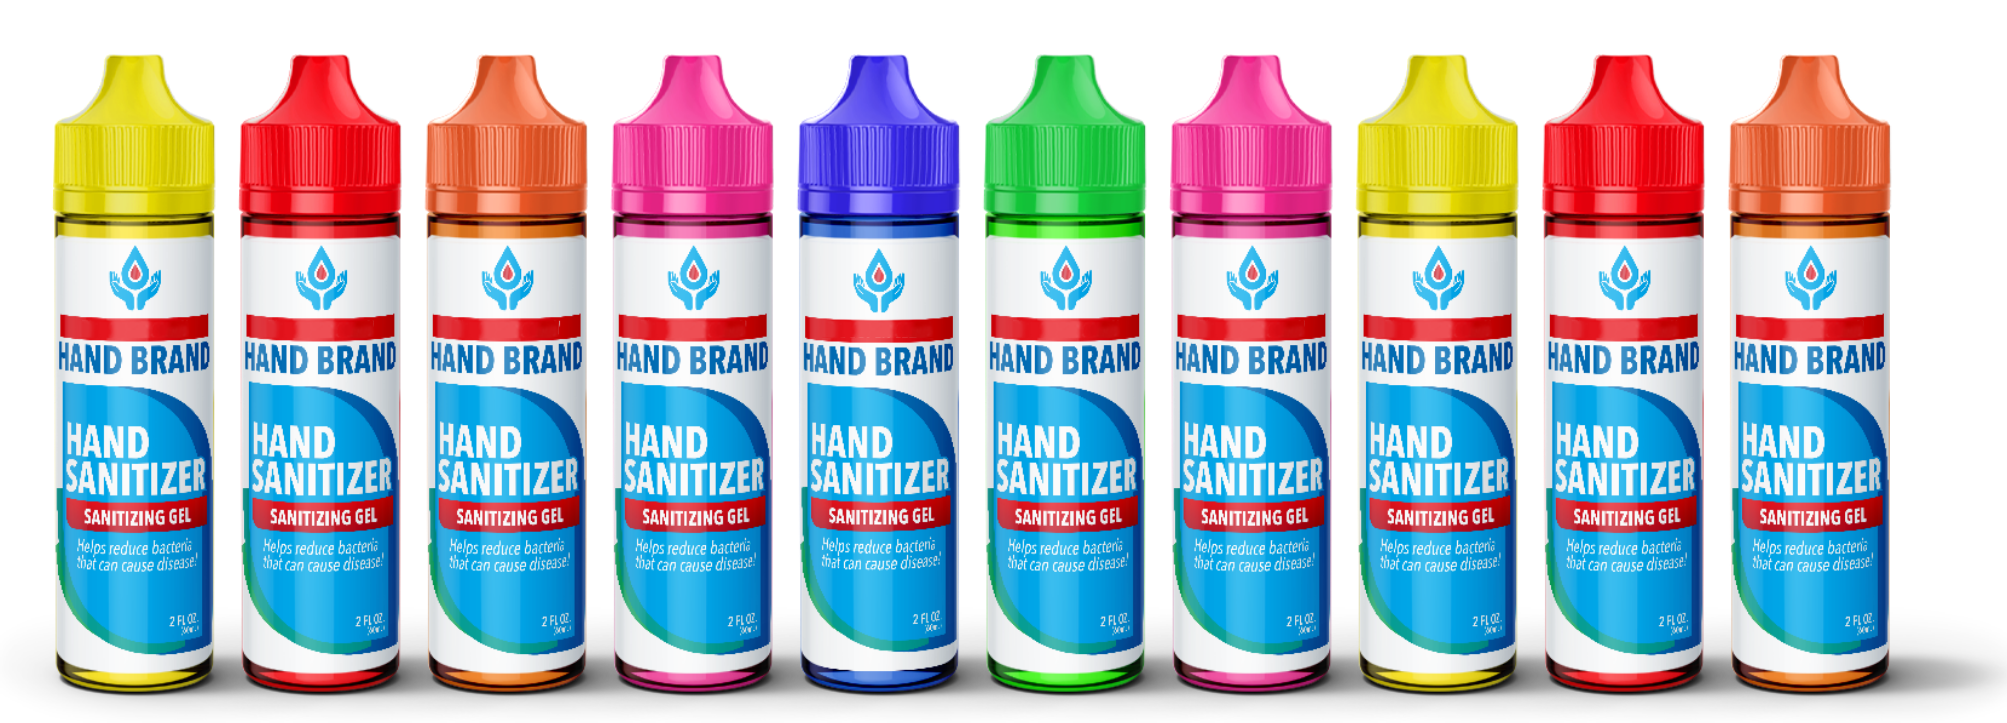 2 OZ – Hand Brand (60mL) Hand Sanitizer by HSI Professional